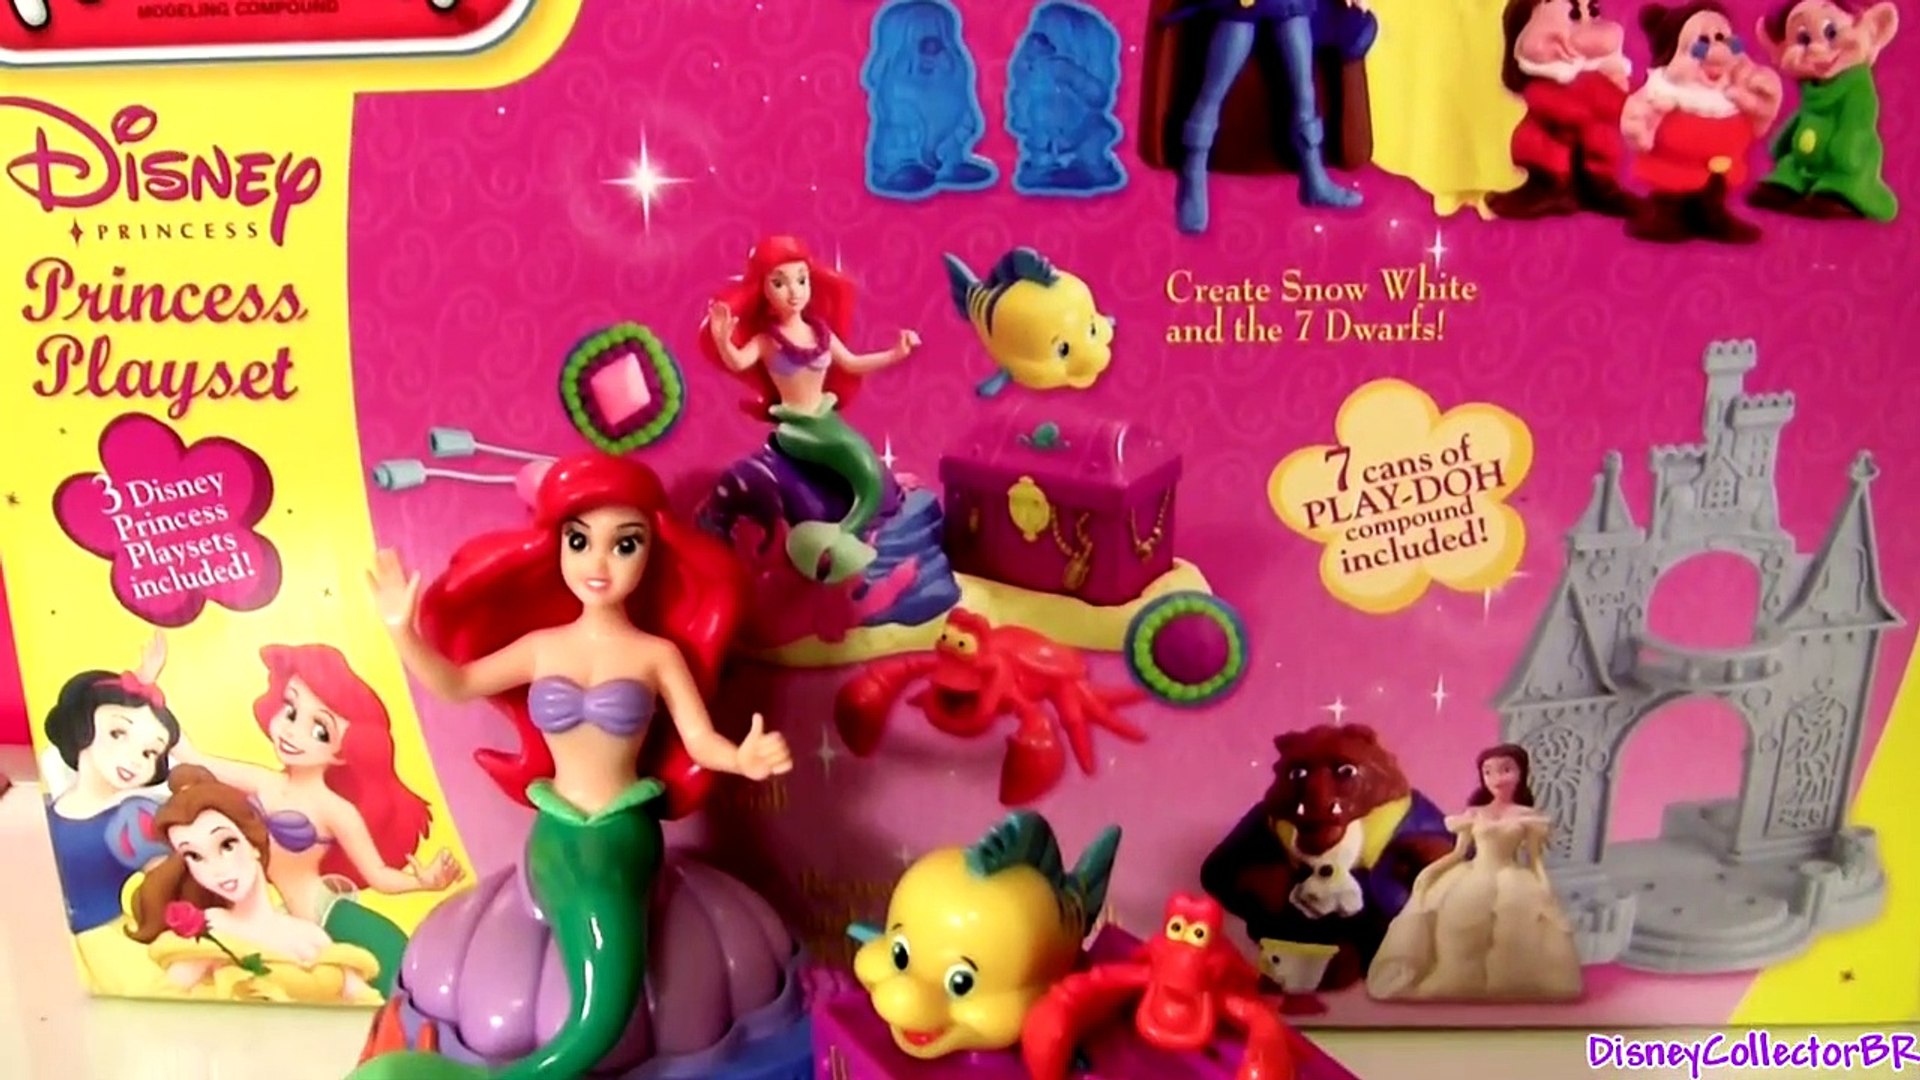 Play Doh Ariel The Little Mermaid ♡ Disney Princess With Flounder Sebastian  playdough toys review - video Dailymotion